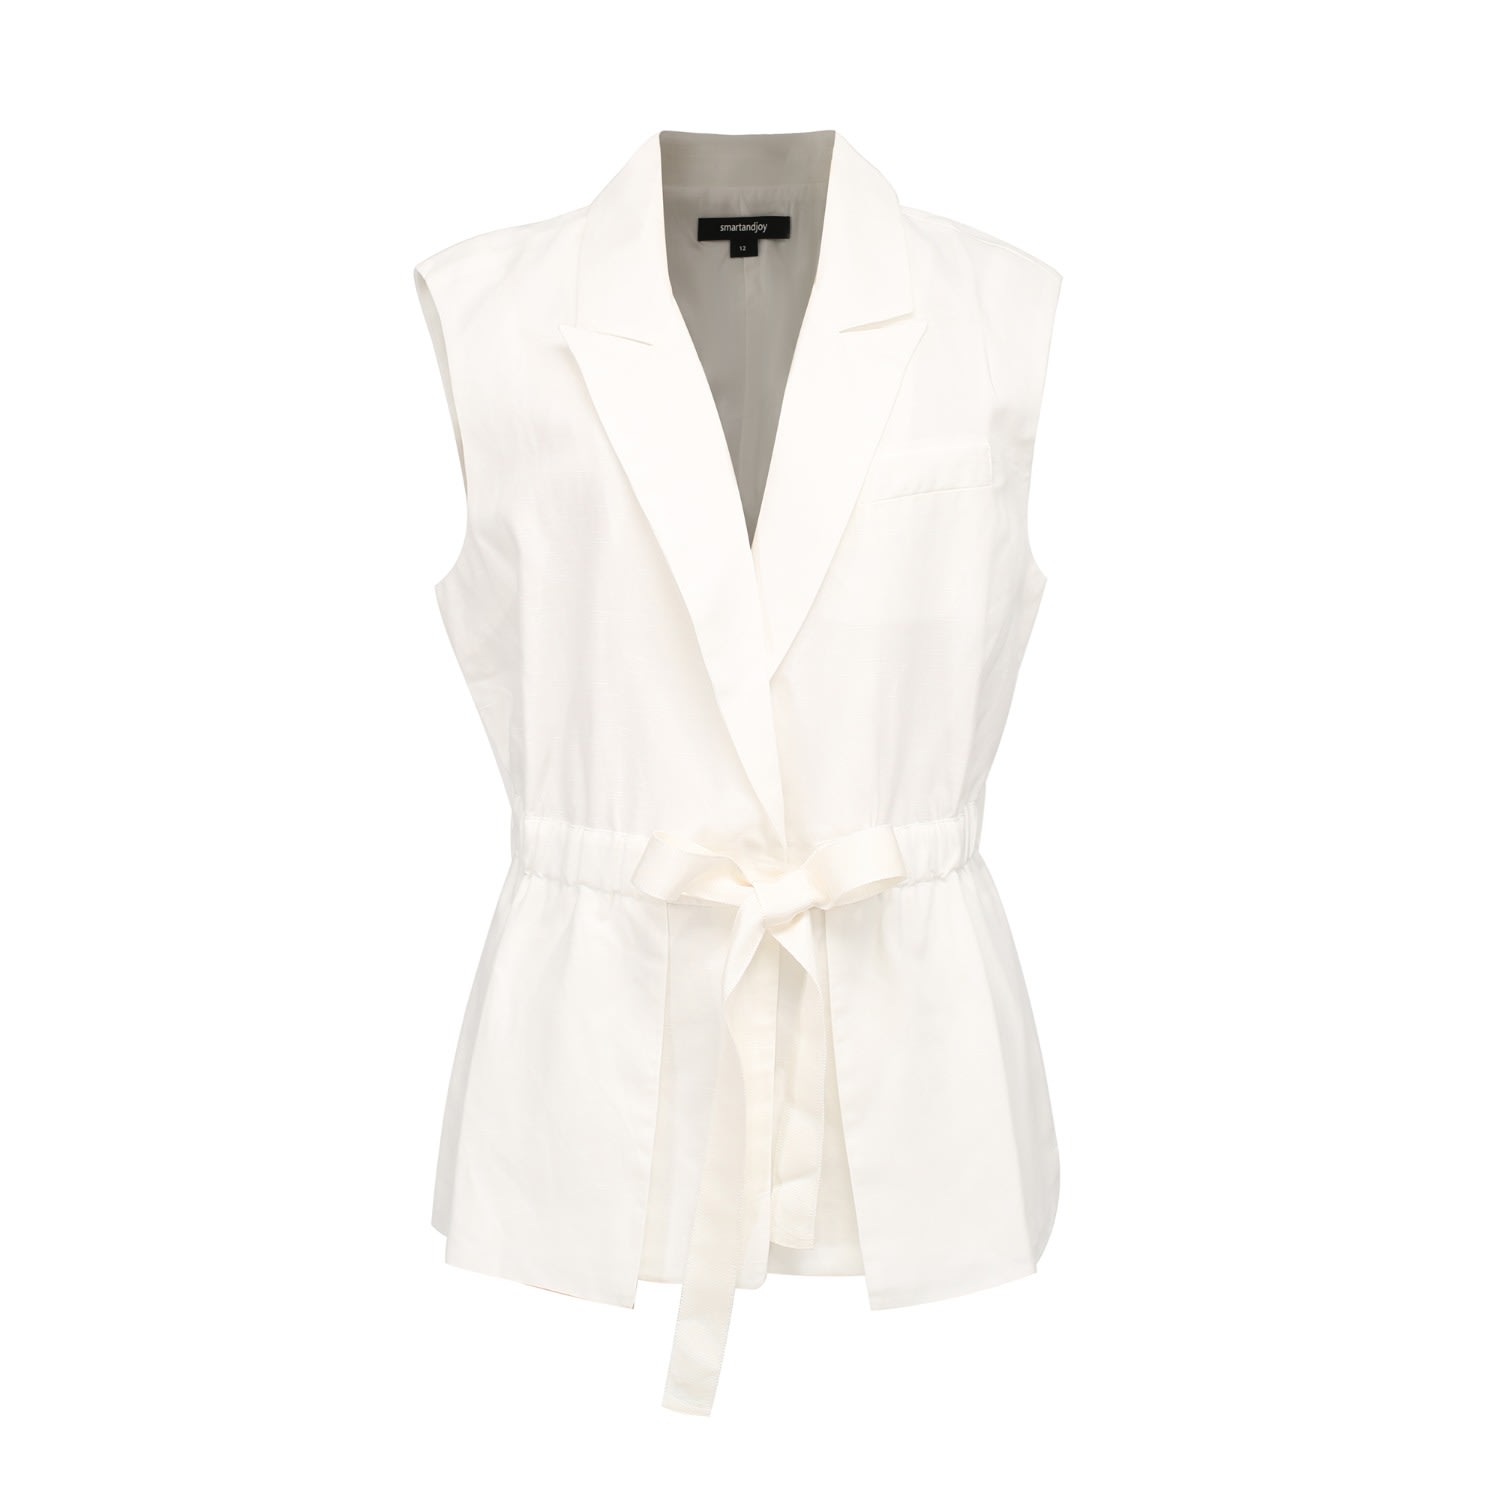 Smart And Joy Women's Waistcoat With Drawstring - White